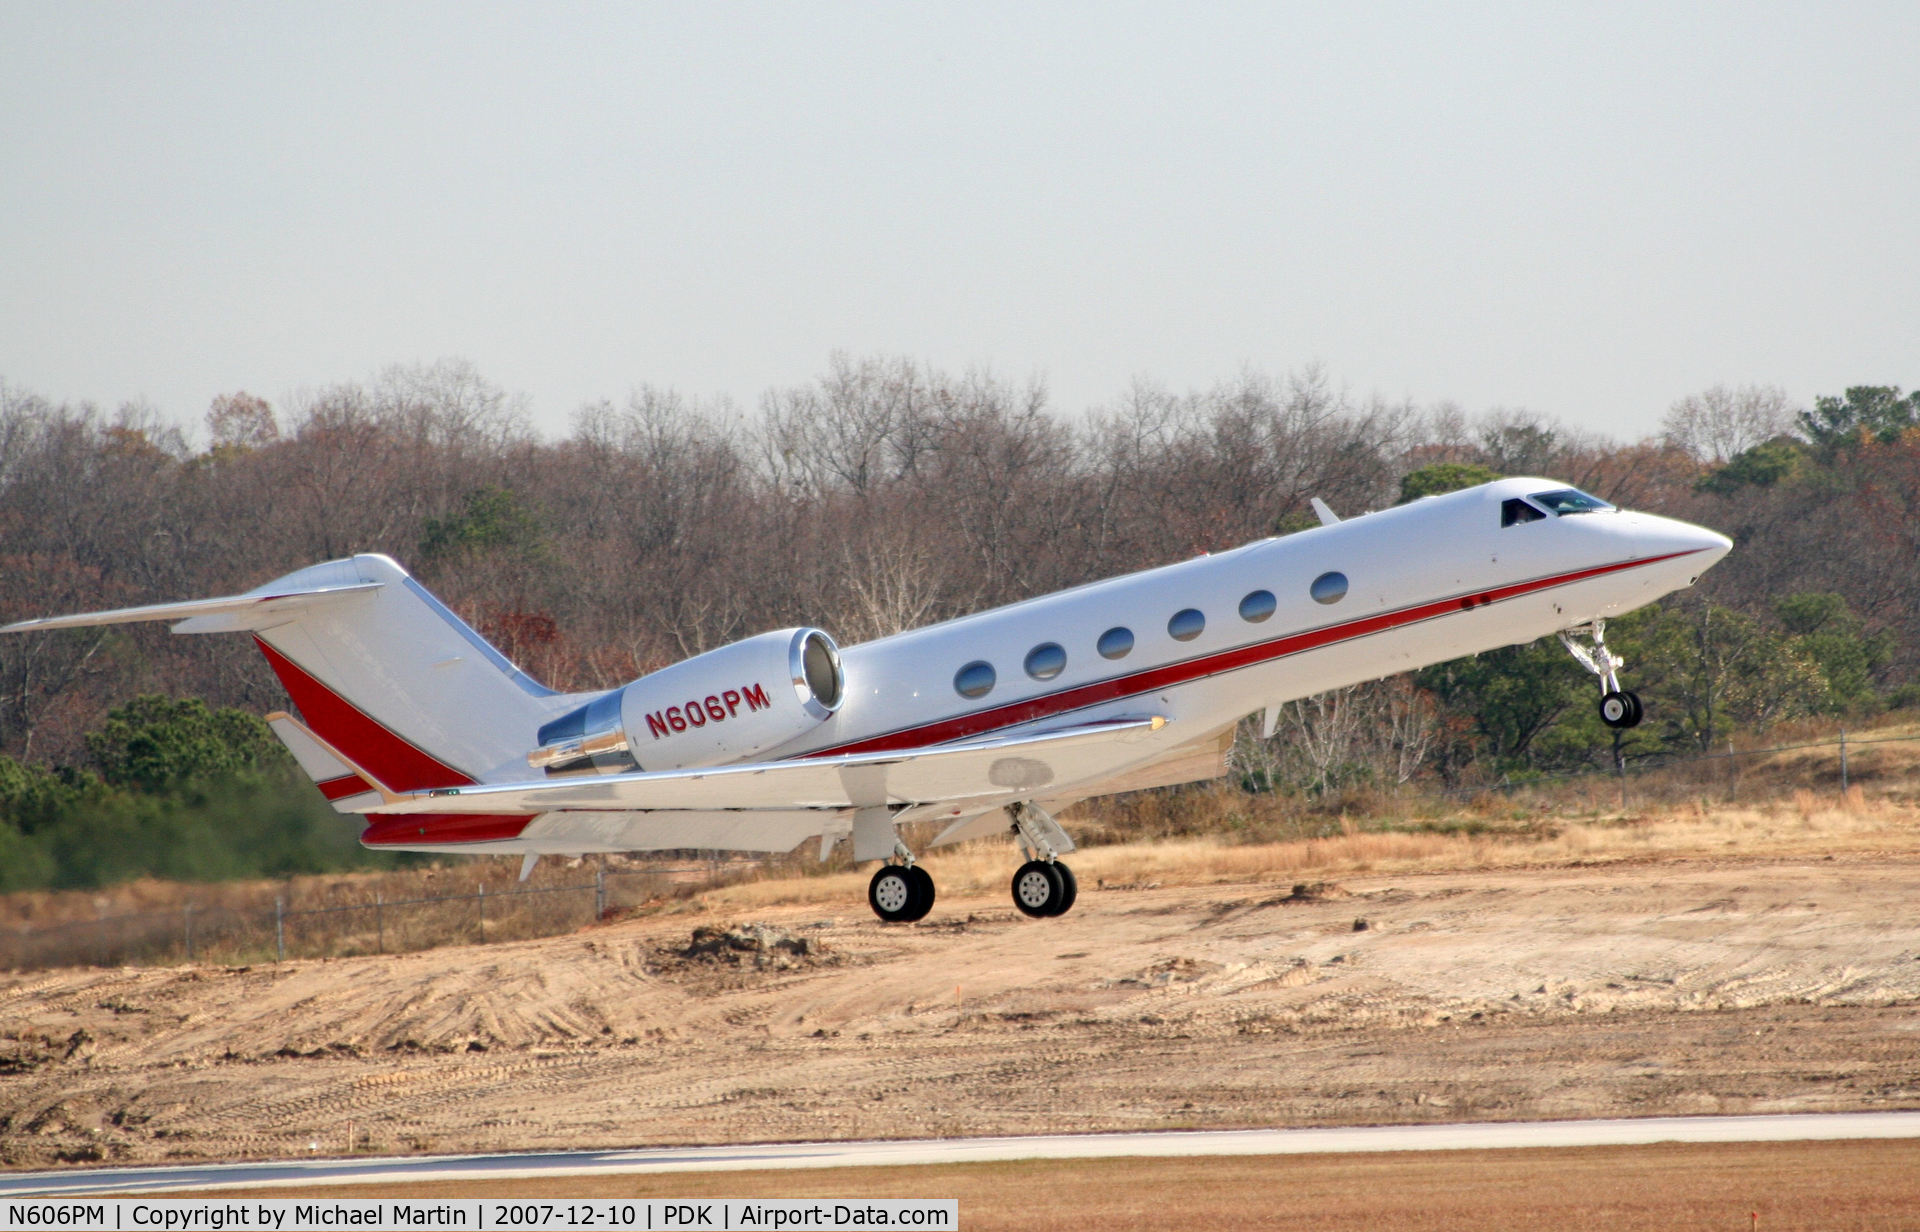 N606PM, 2003 Gulfstream Aerospace G-IV C/N 1512, Departing PDK enroute to TEB